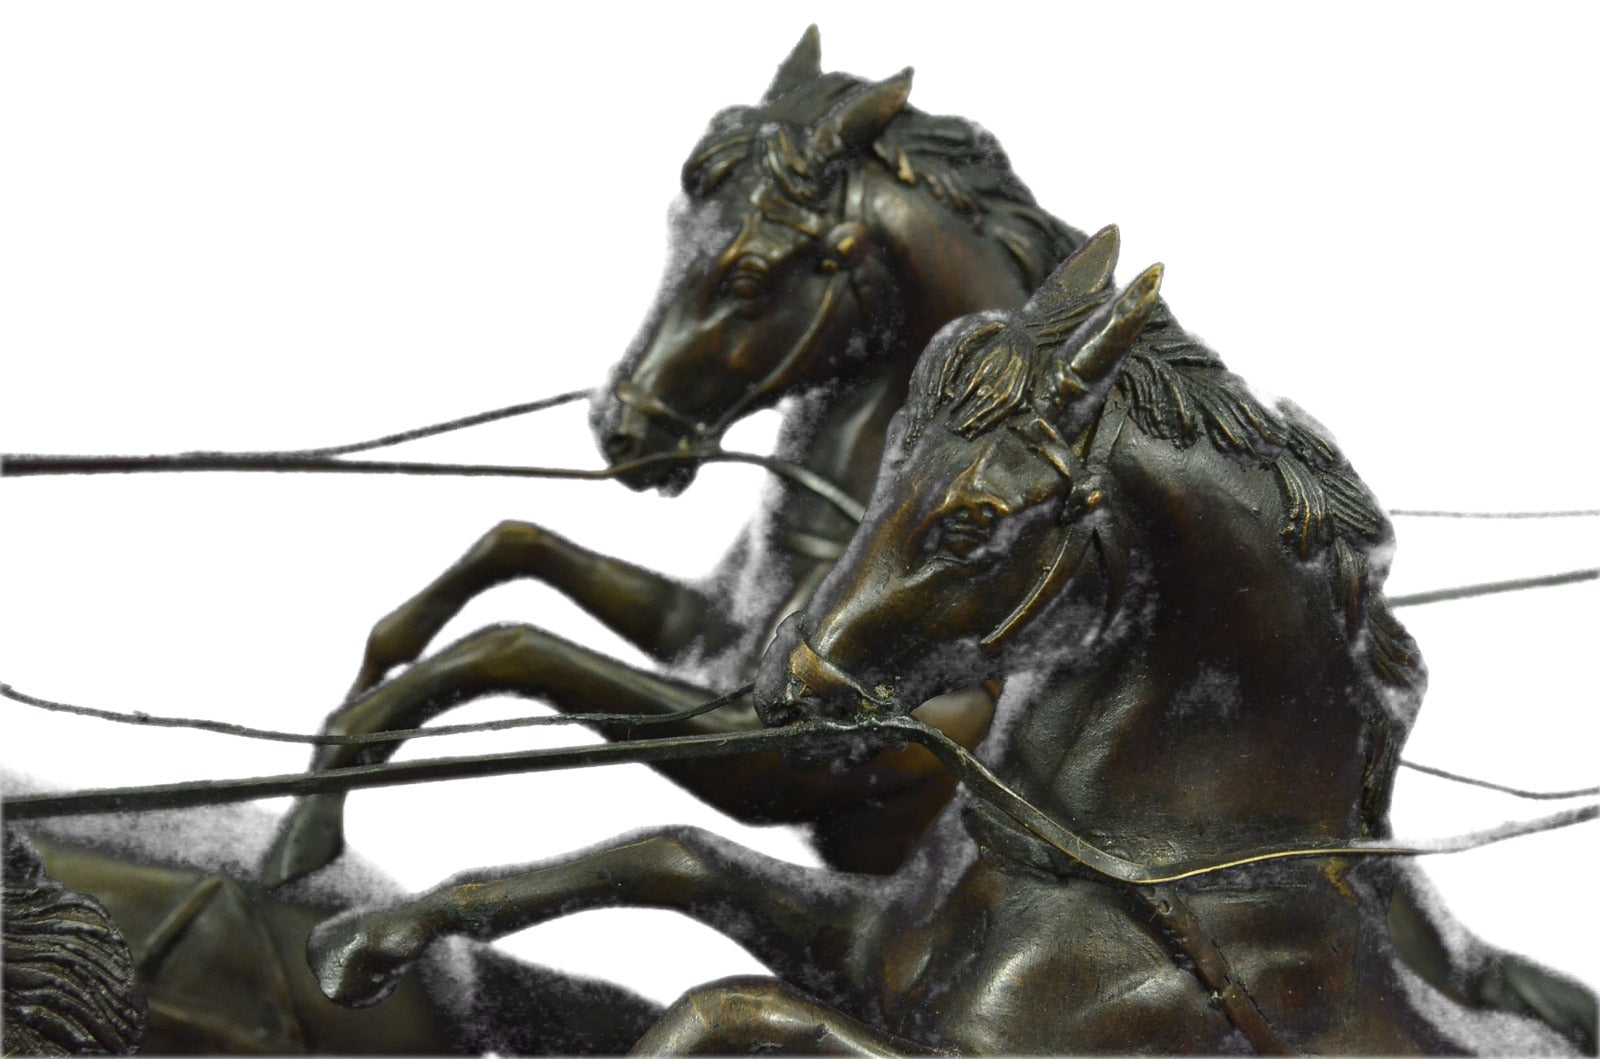 Real Bronze Sculpture Collector Edition Roman Chariot Collectible Statue Decor